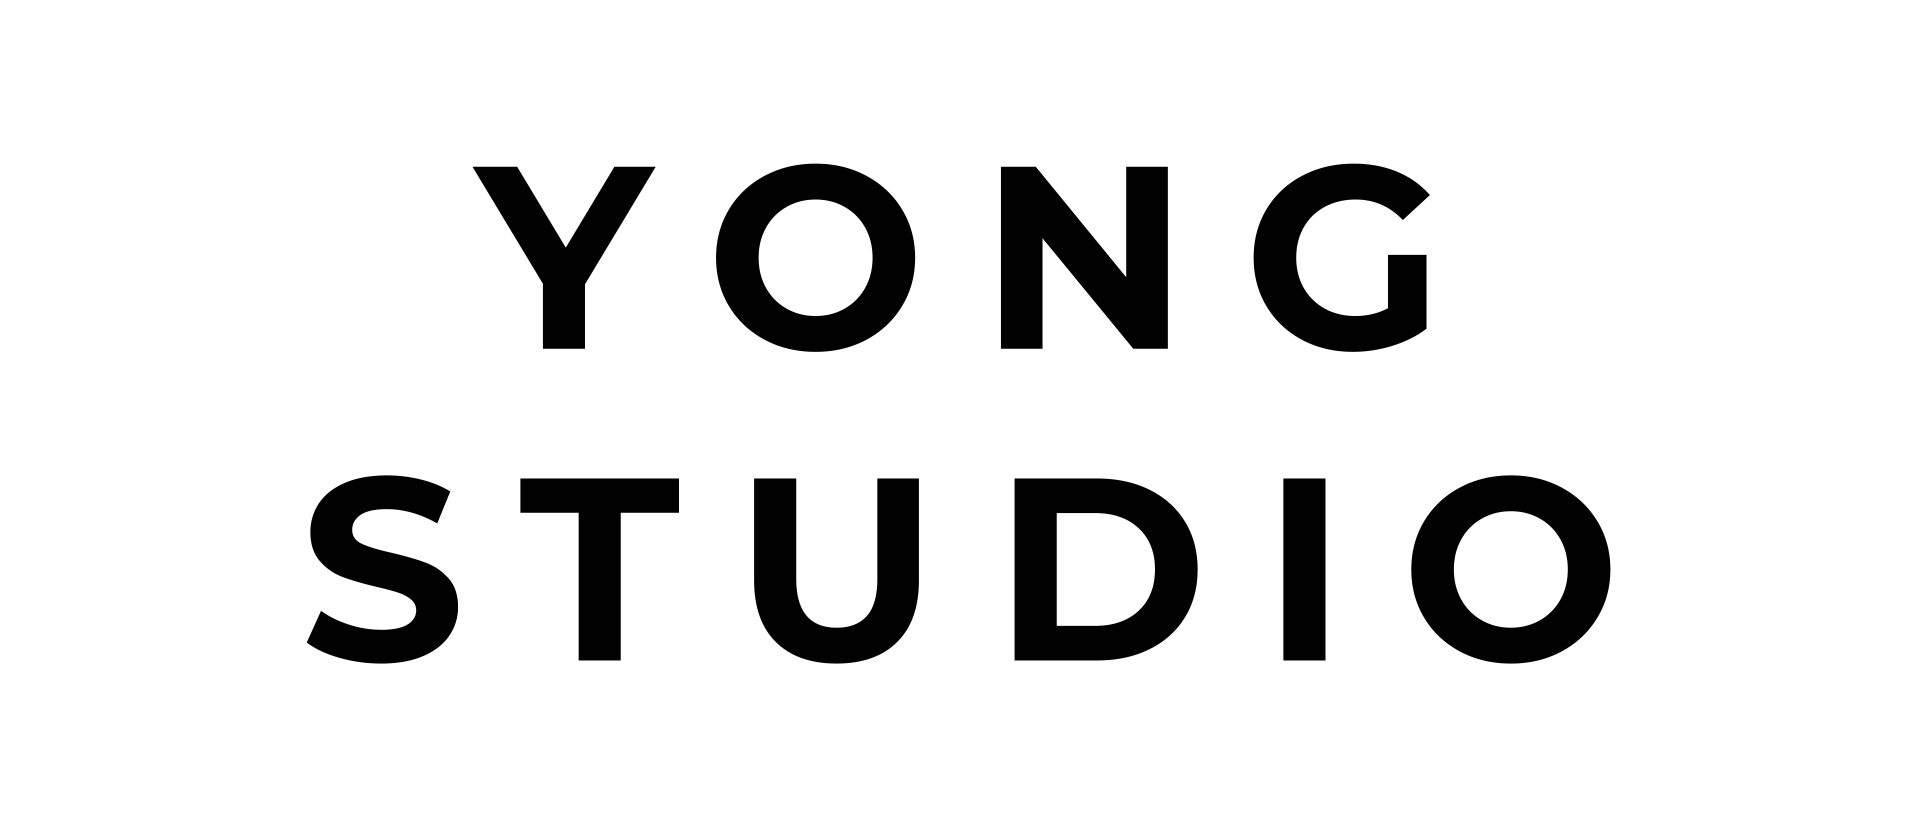 Yong Studio - The Podium